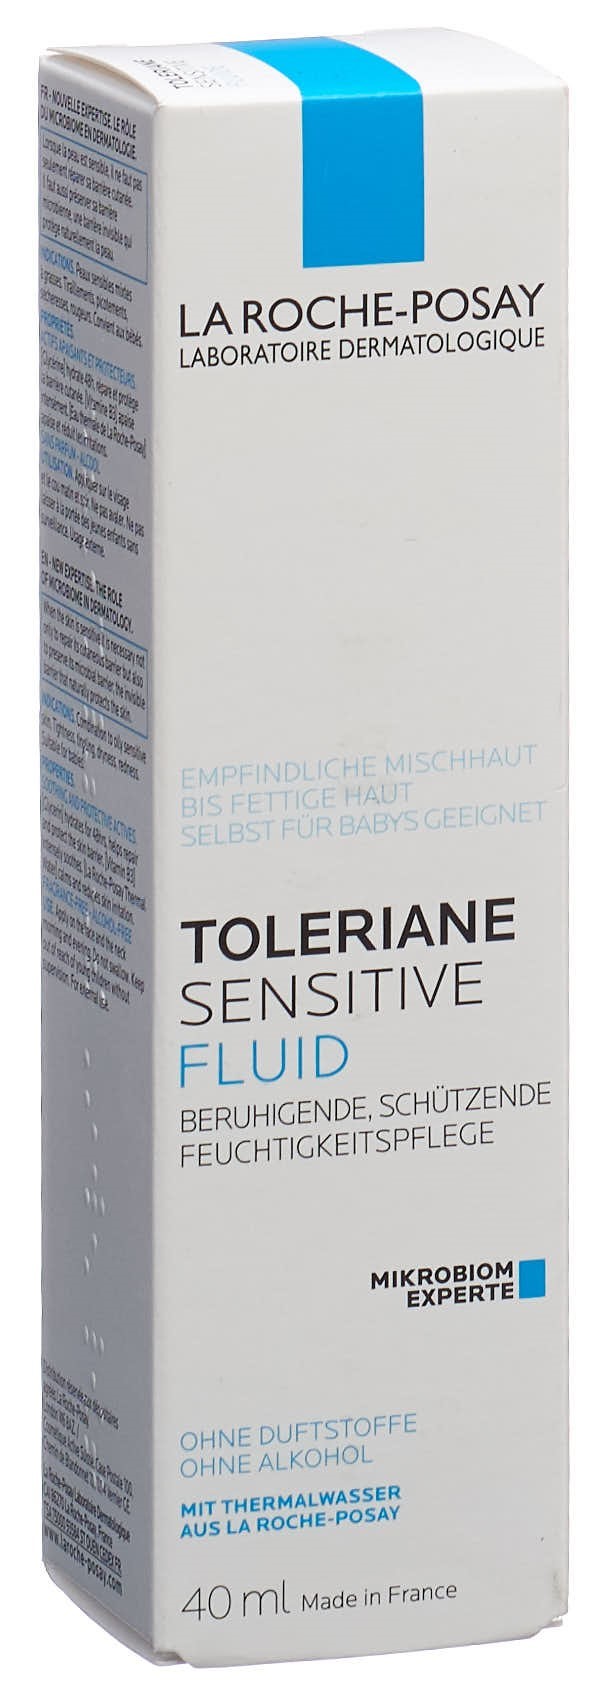 ROCHE POSAY Toleriane sensitive Fluid neu 40 ml